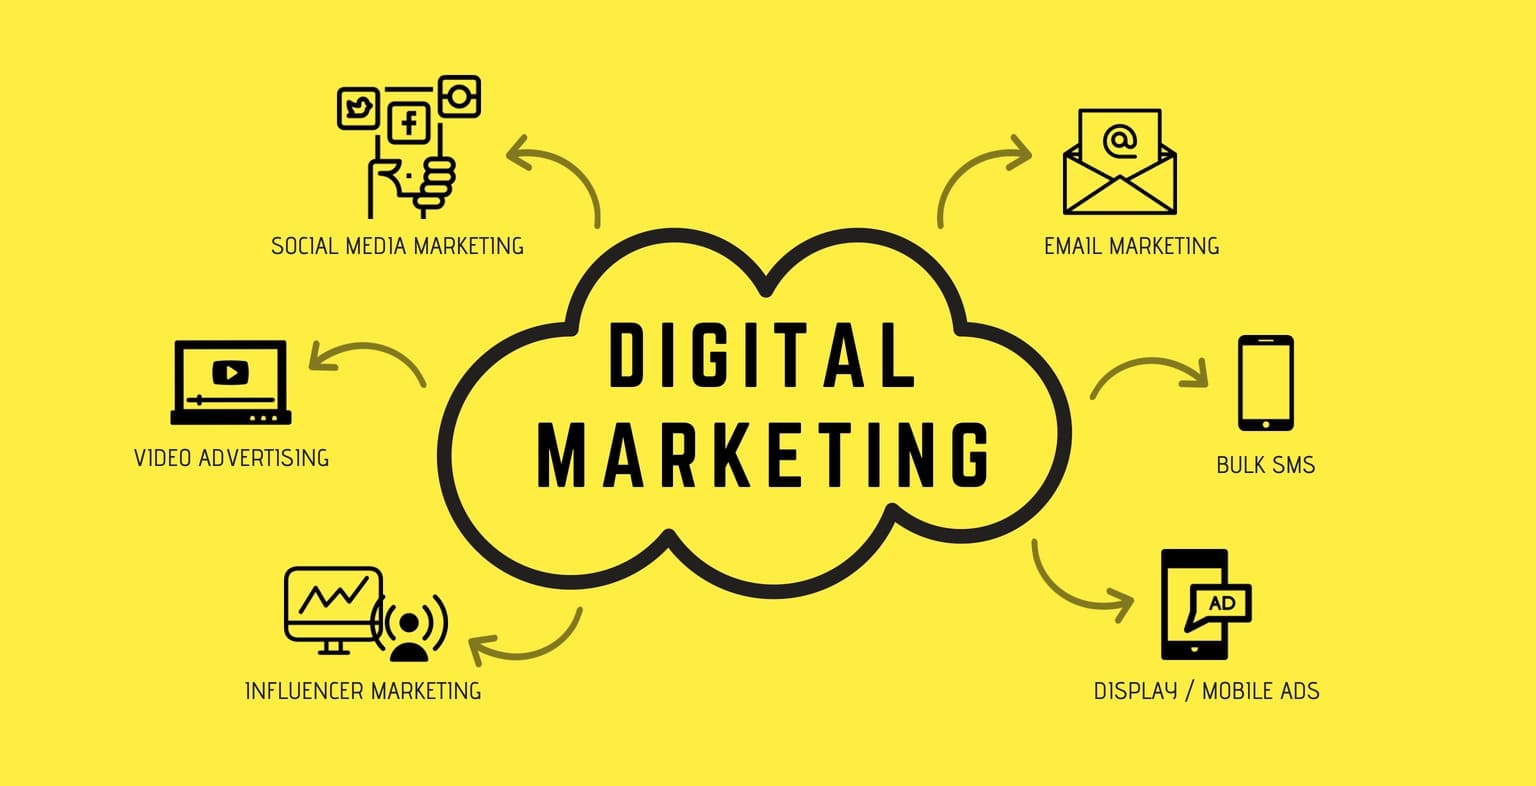 Digital Marketing in the new era